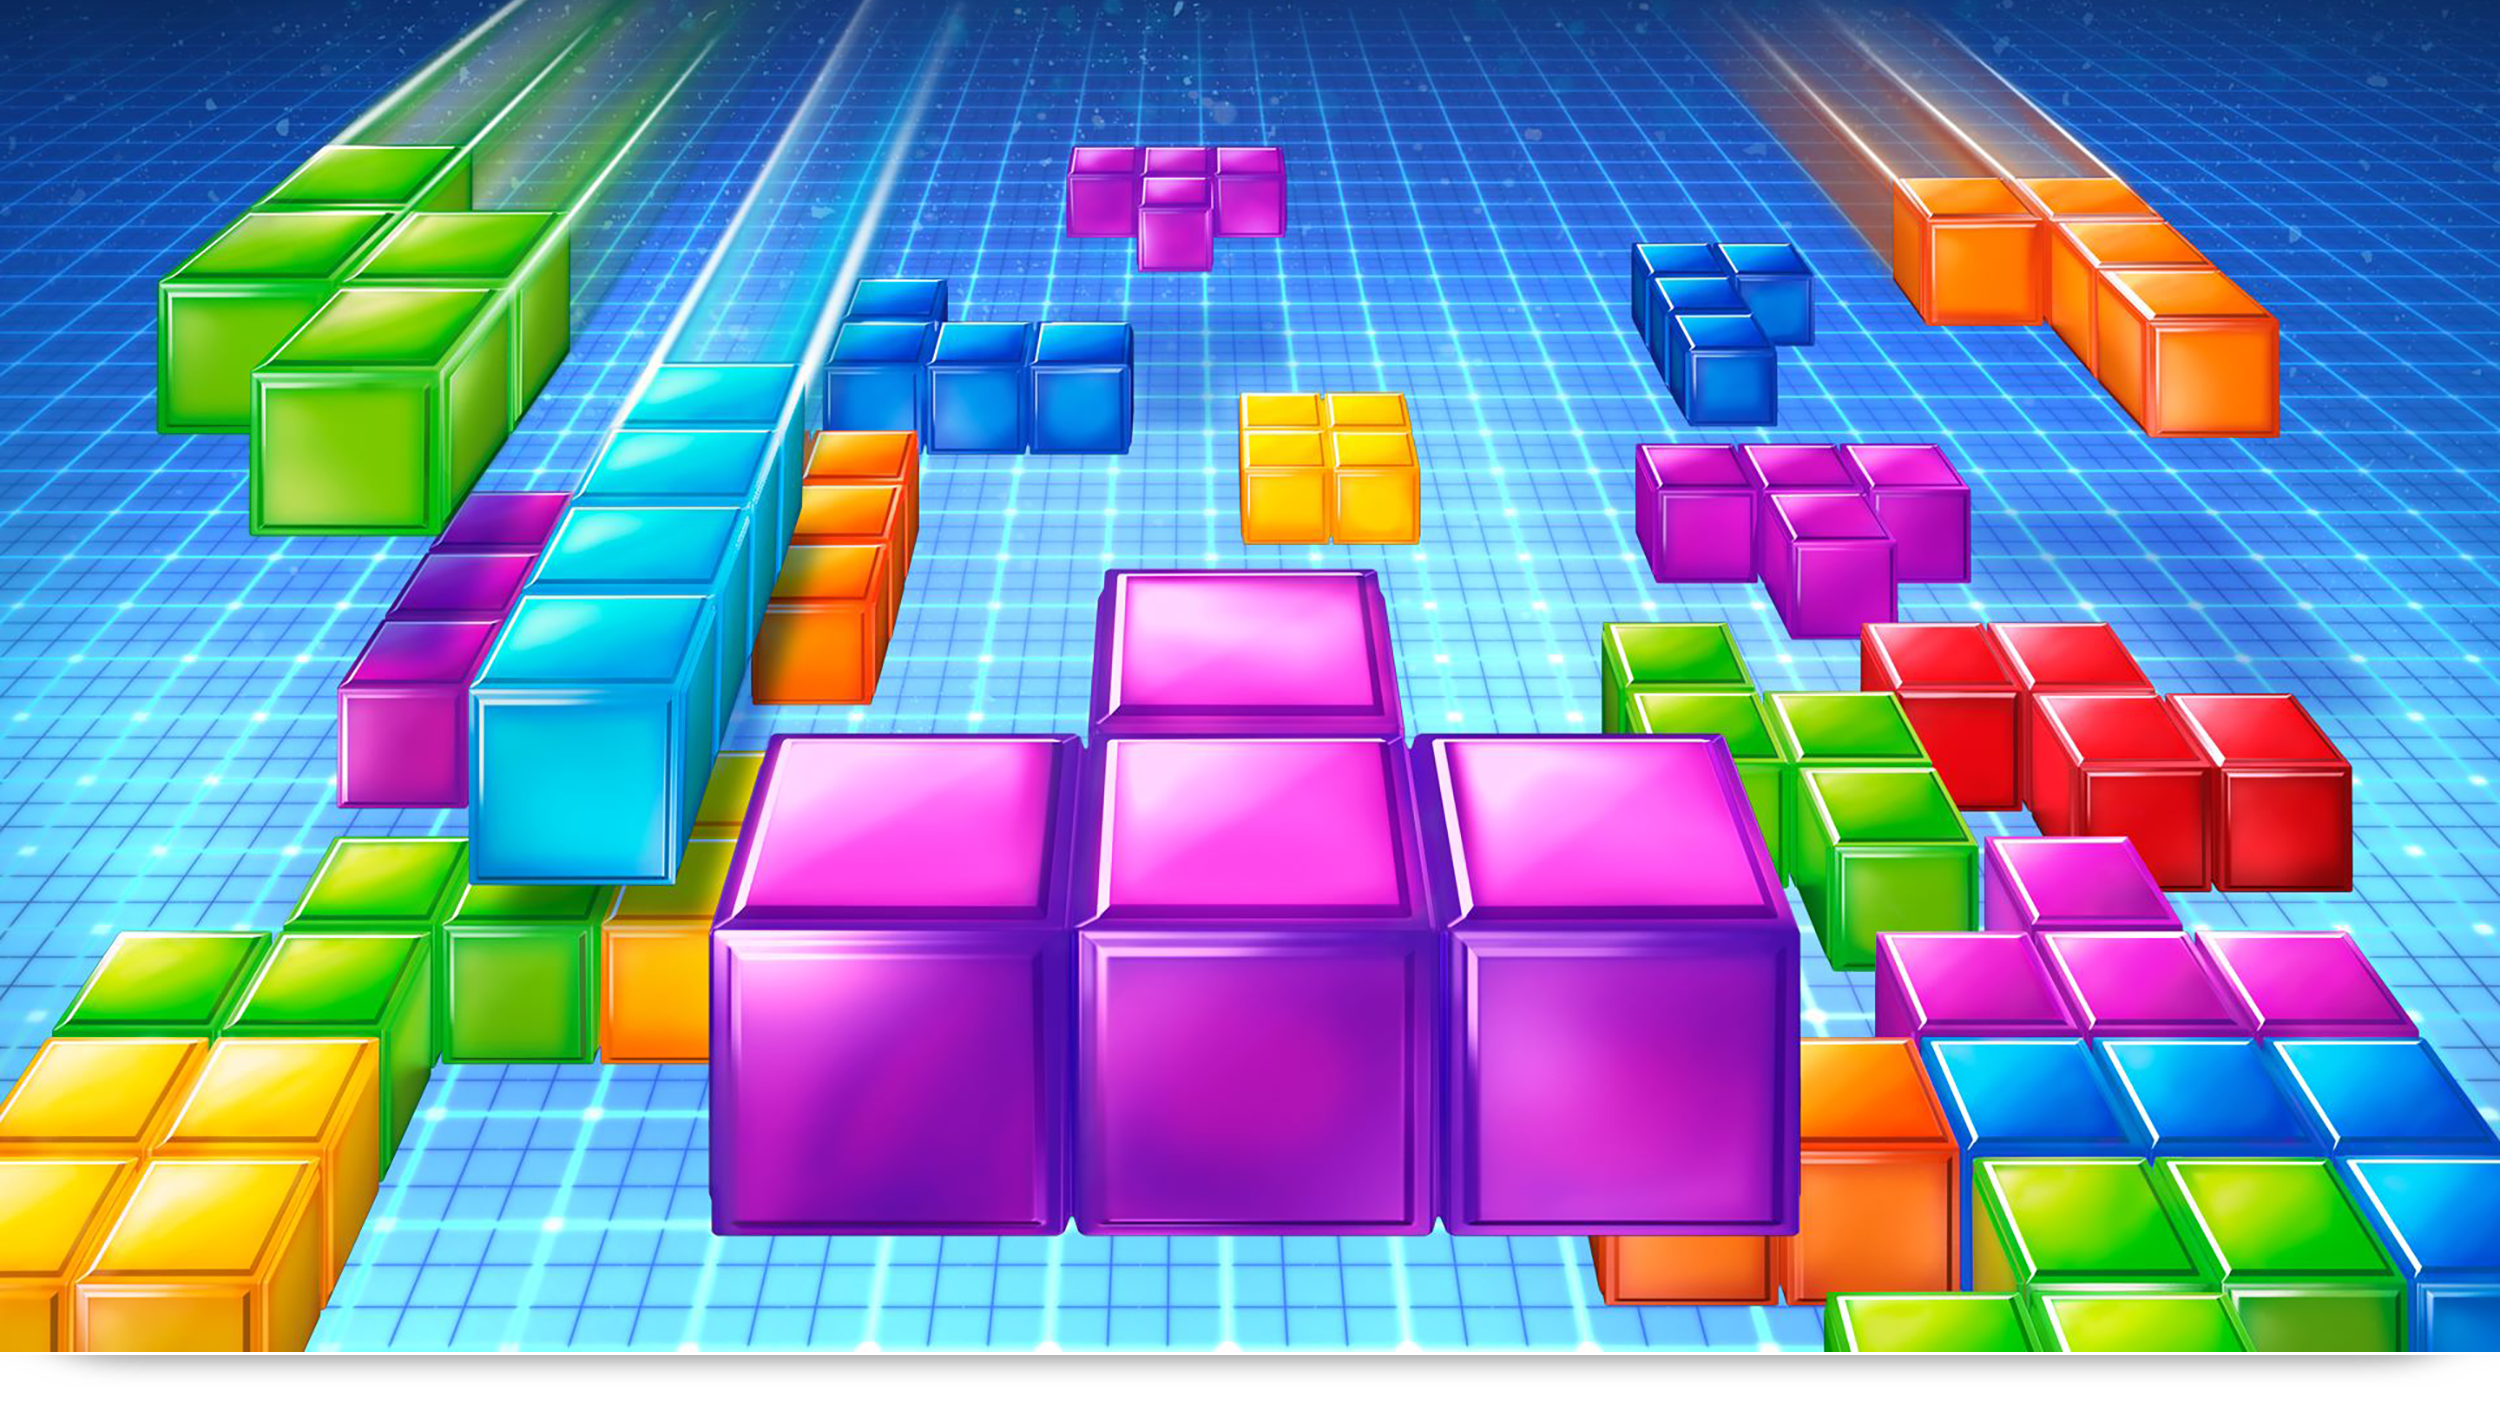 tetris with friends marathon